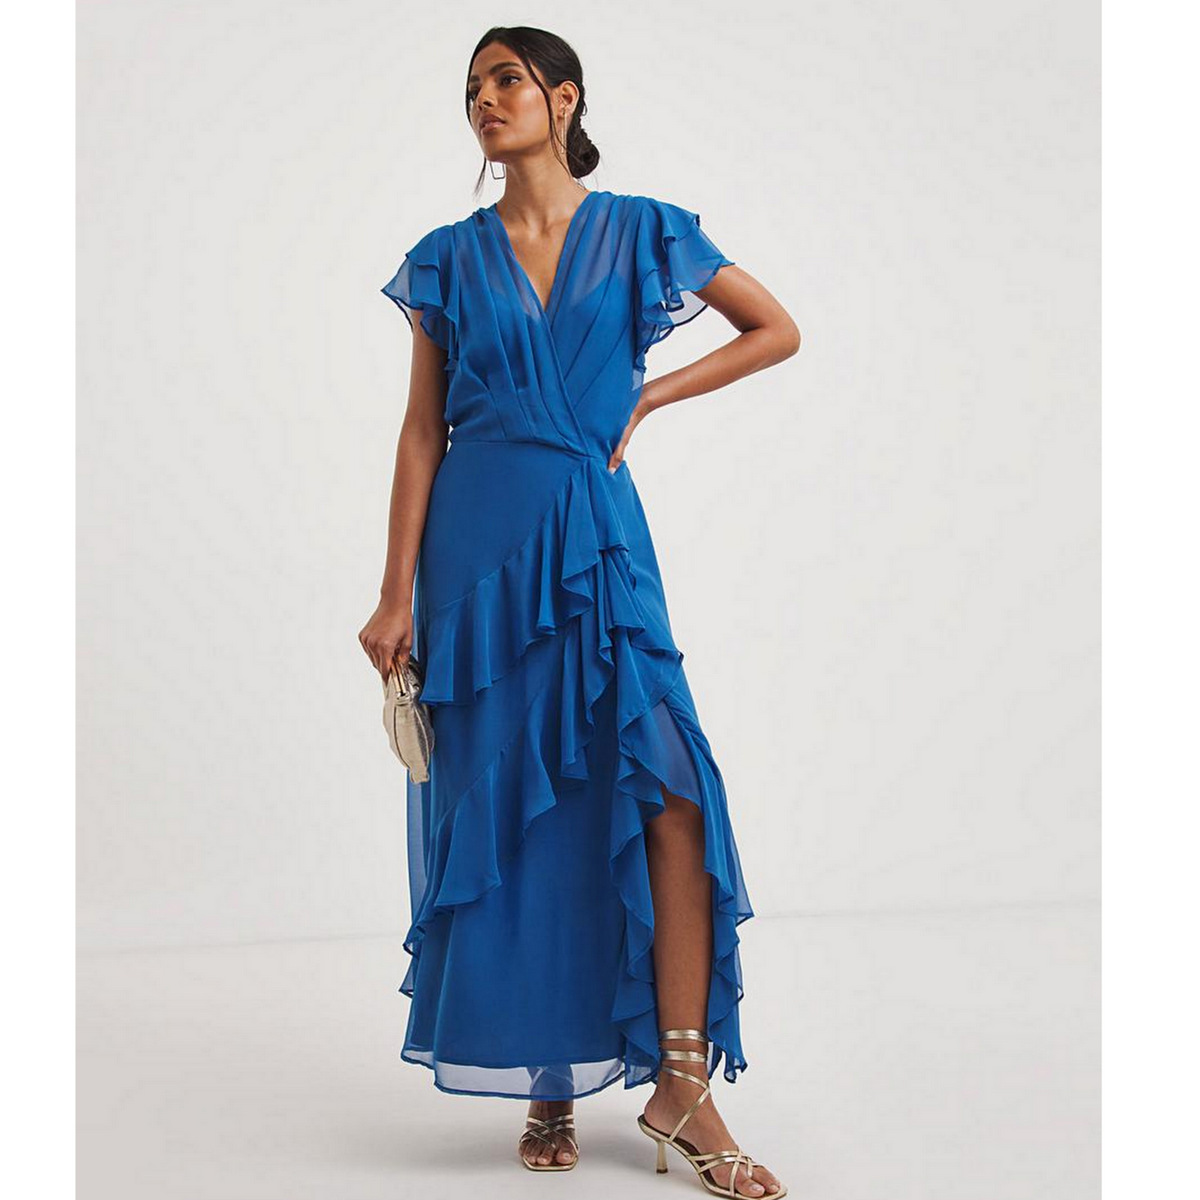 Joanna Hope Blue Printed Ruffle Maxi Dress | Absolute Home